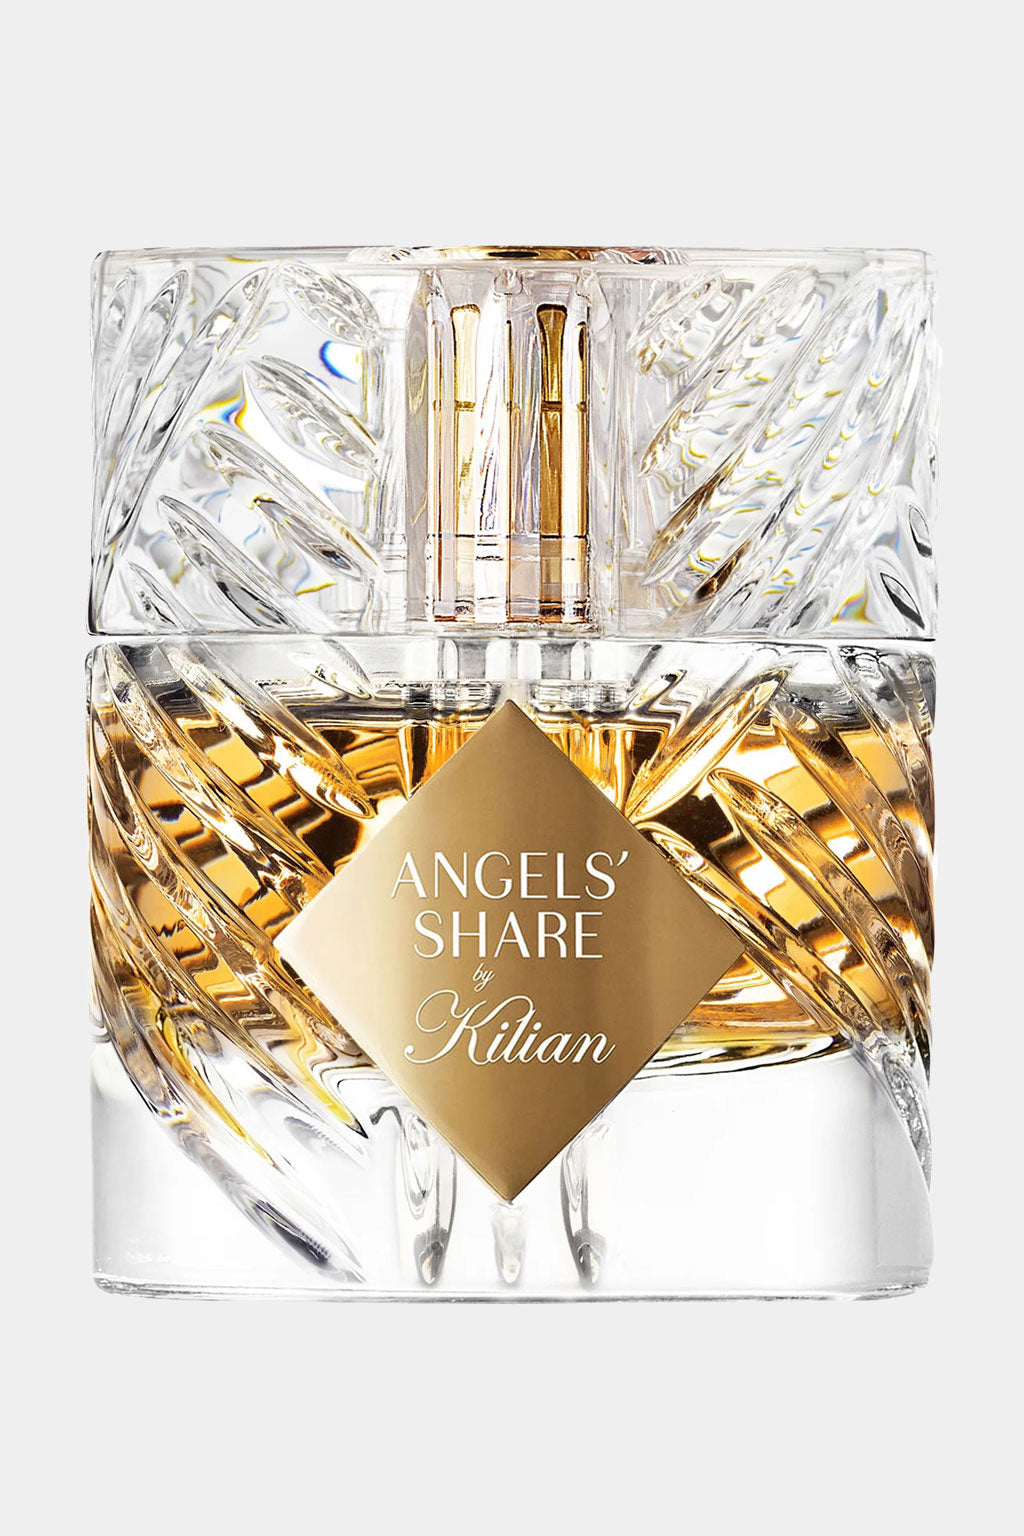 Kilian - Angels' Share Eau de Parfum